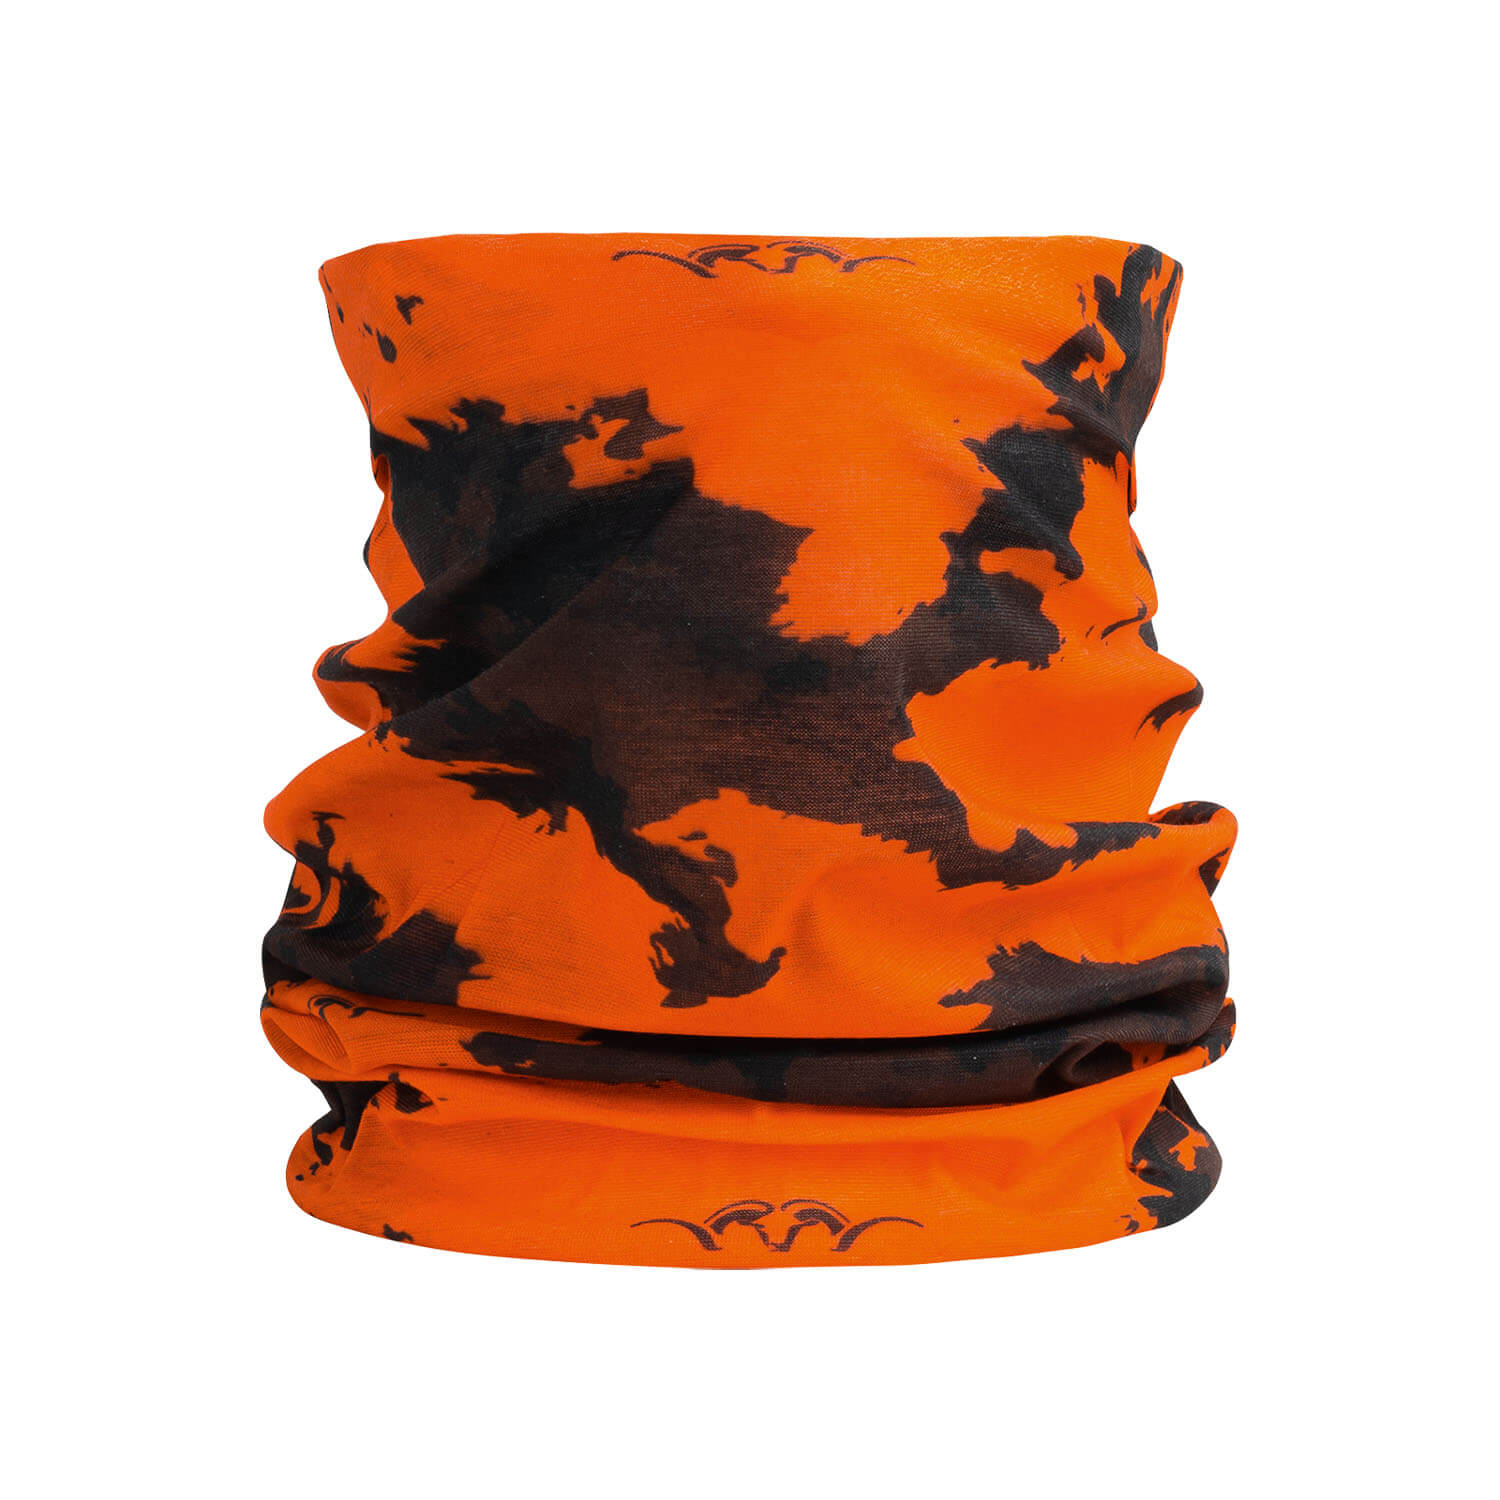 Blaser Buisvormige sjaal Multi-Tube (Blaze Orange)